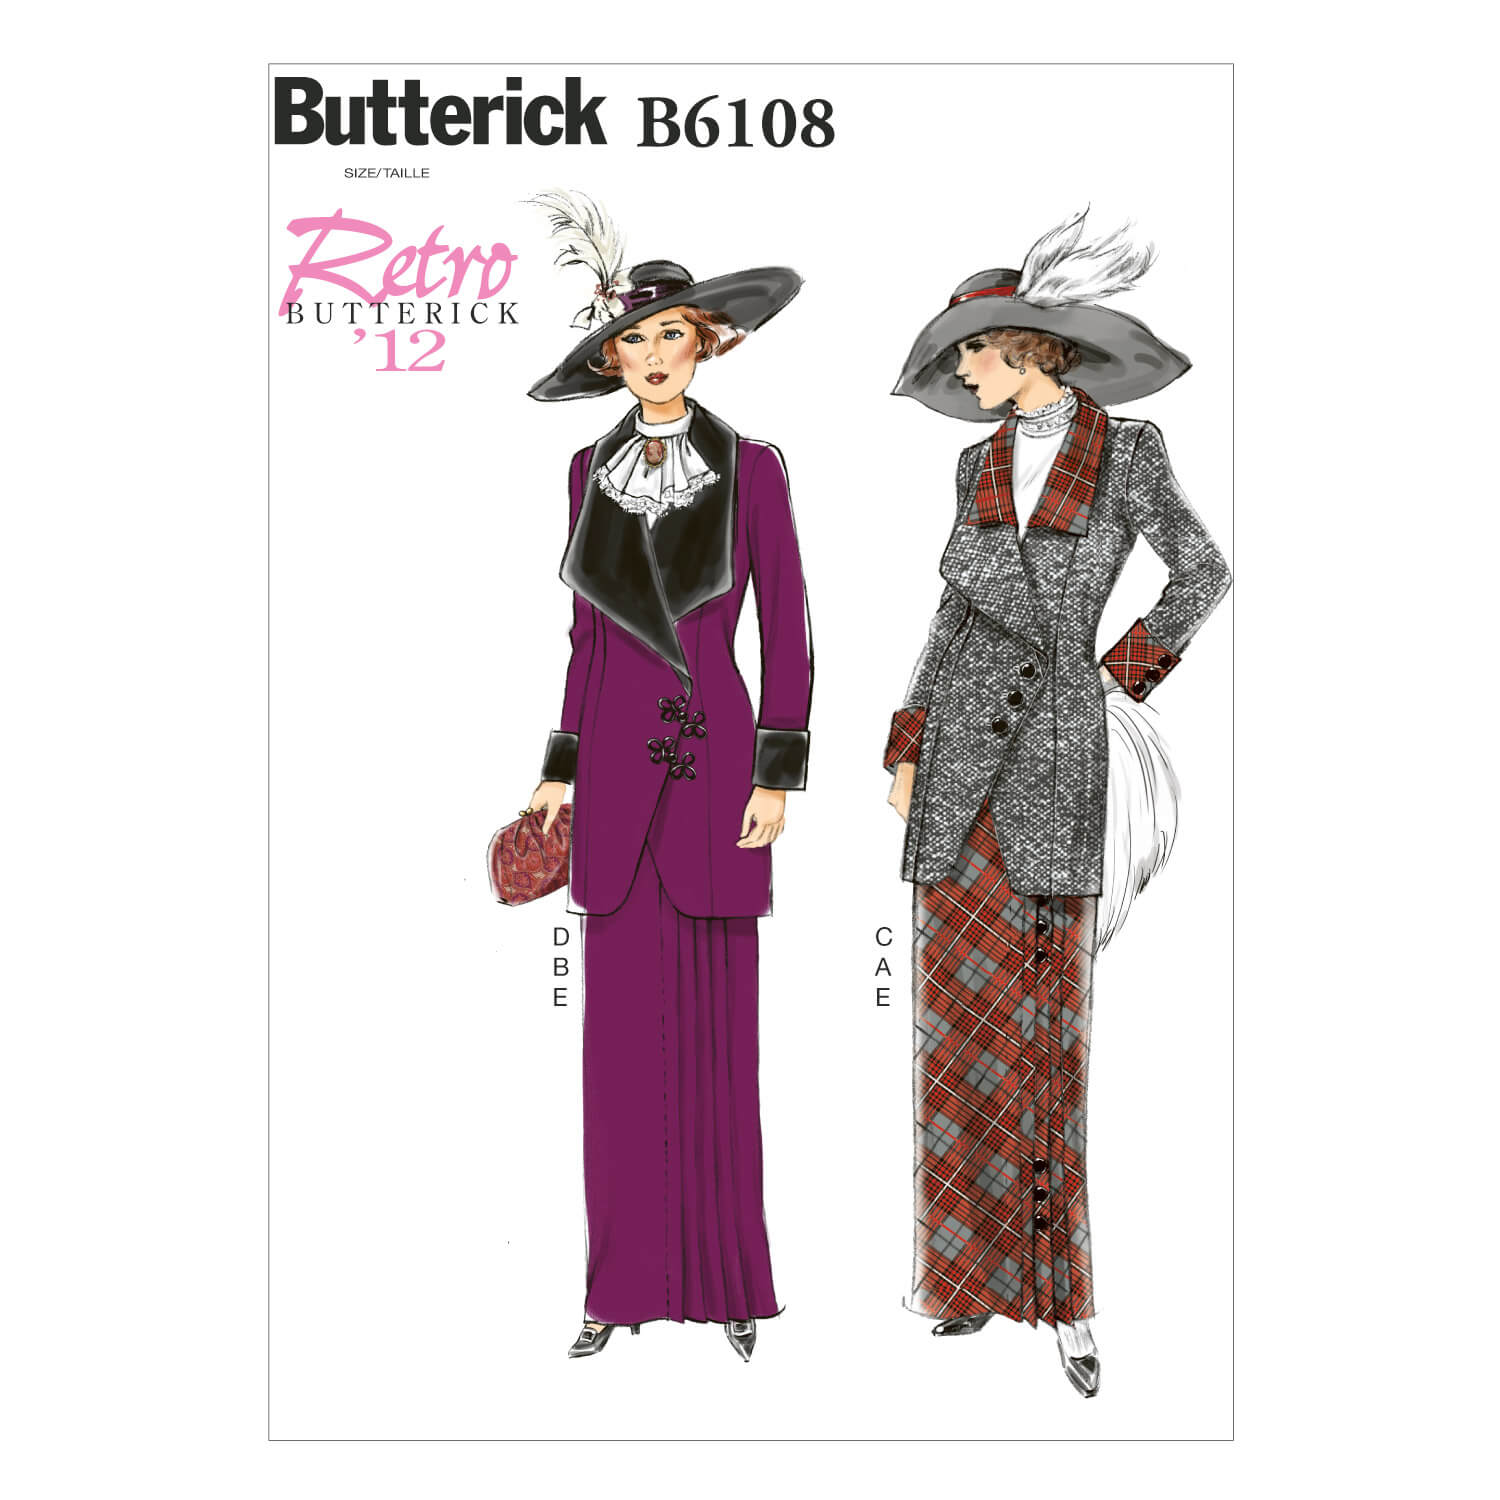 Butterick Sewing Pattern B6108 Misses' Jacket, Bib and Skirt